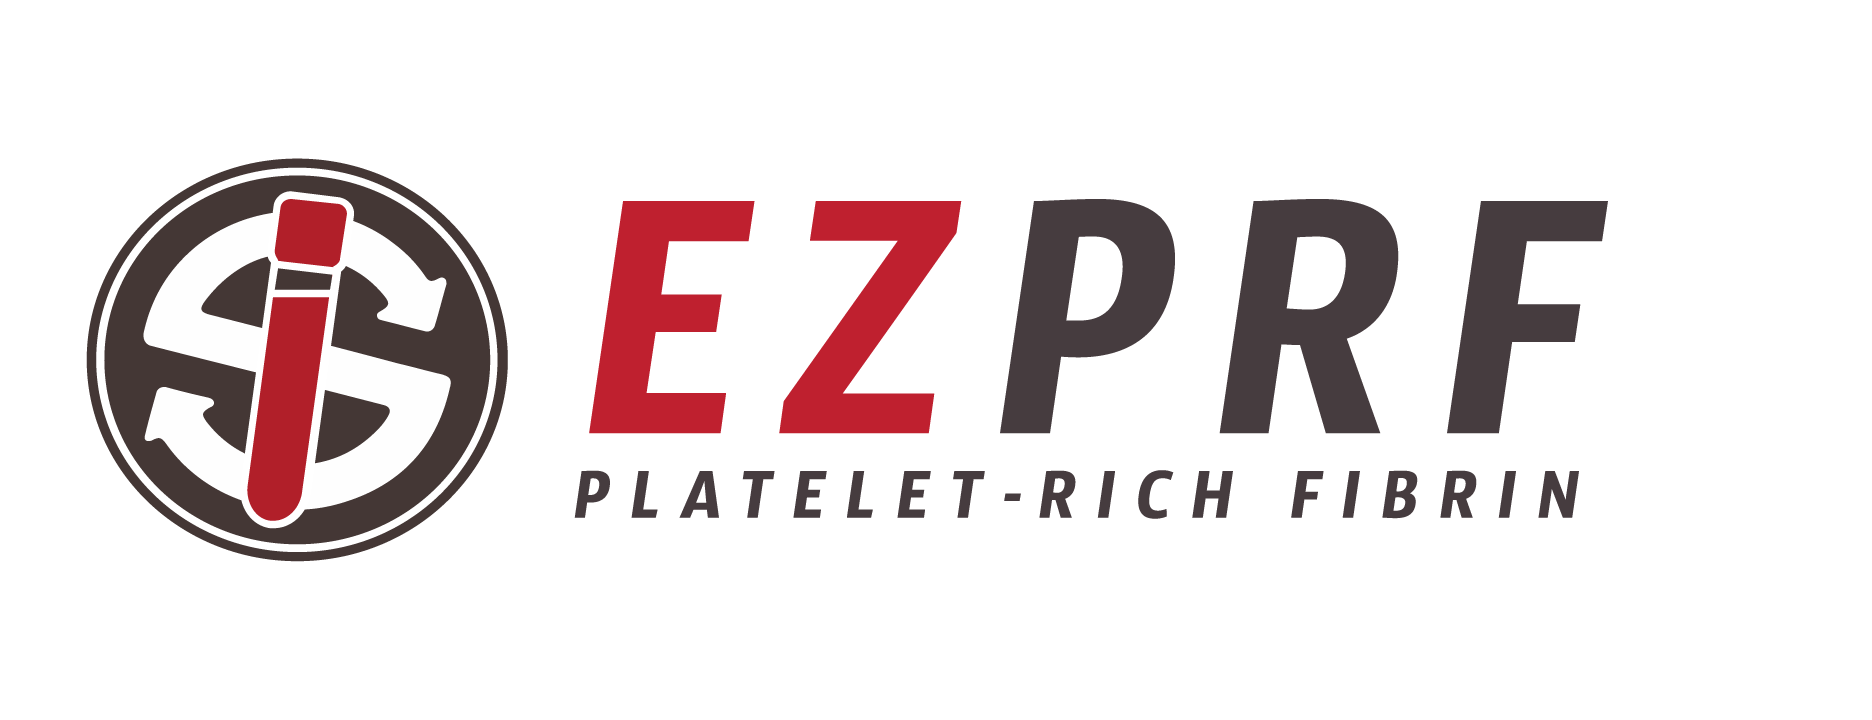 ezprf-logo